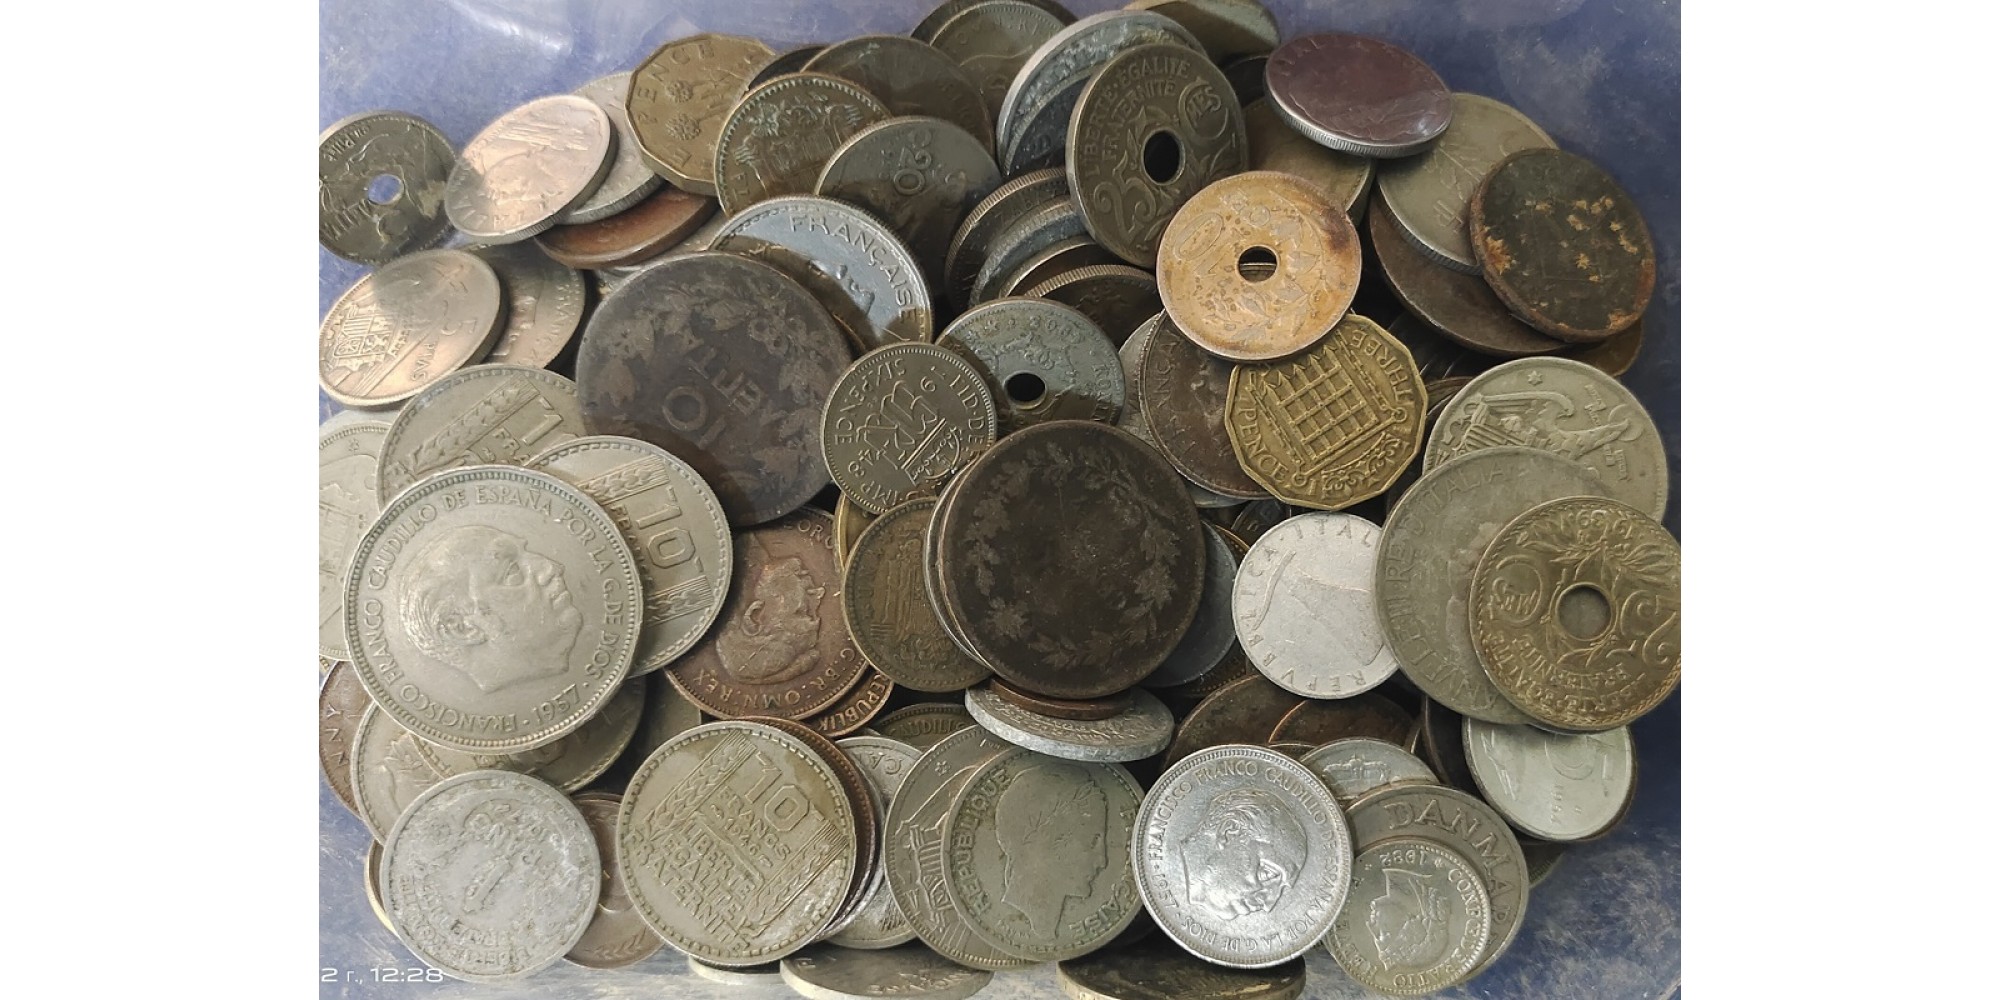 Европа 1 кг 1000 гр иностранных монет микс монеты старая Европа до 1960 гг